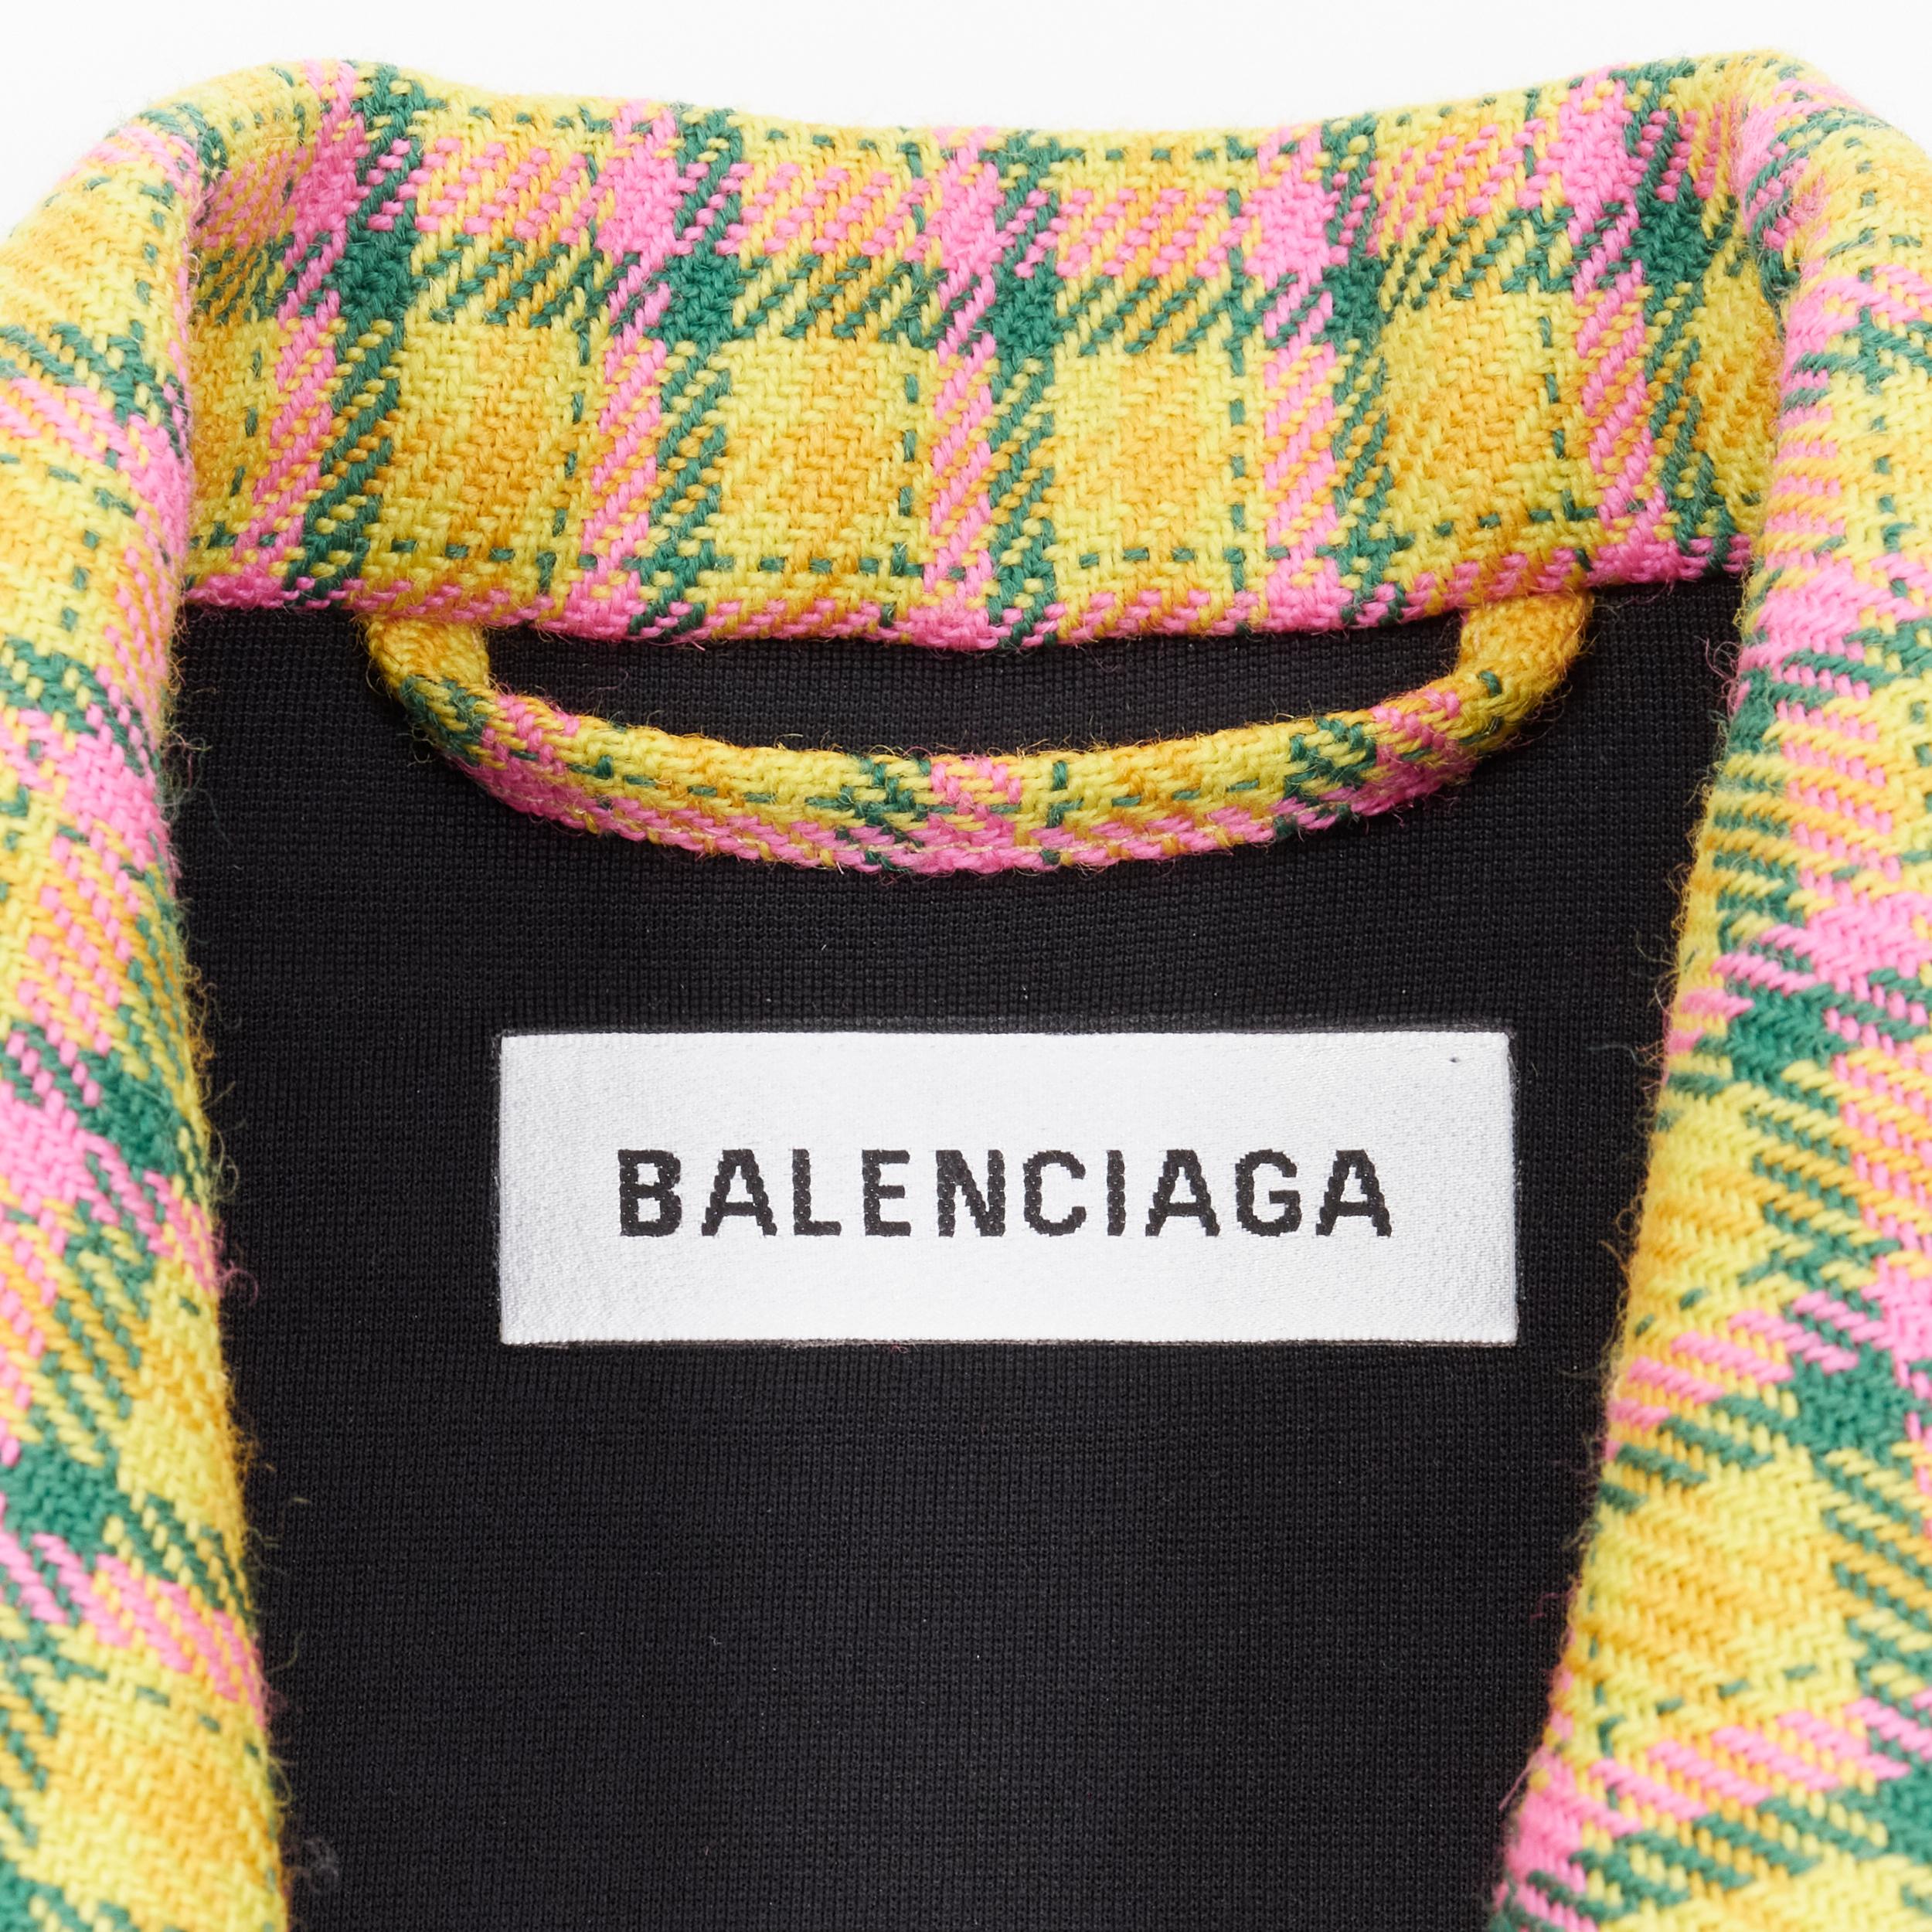 runway BALENCIAGA 2018 Hourglass yellow pink check wool peplum coat FR36 XS 3